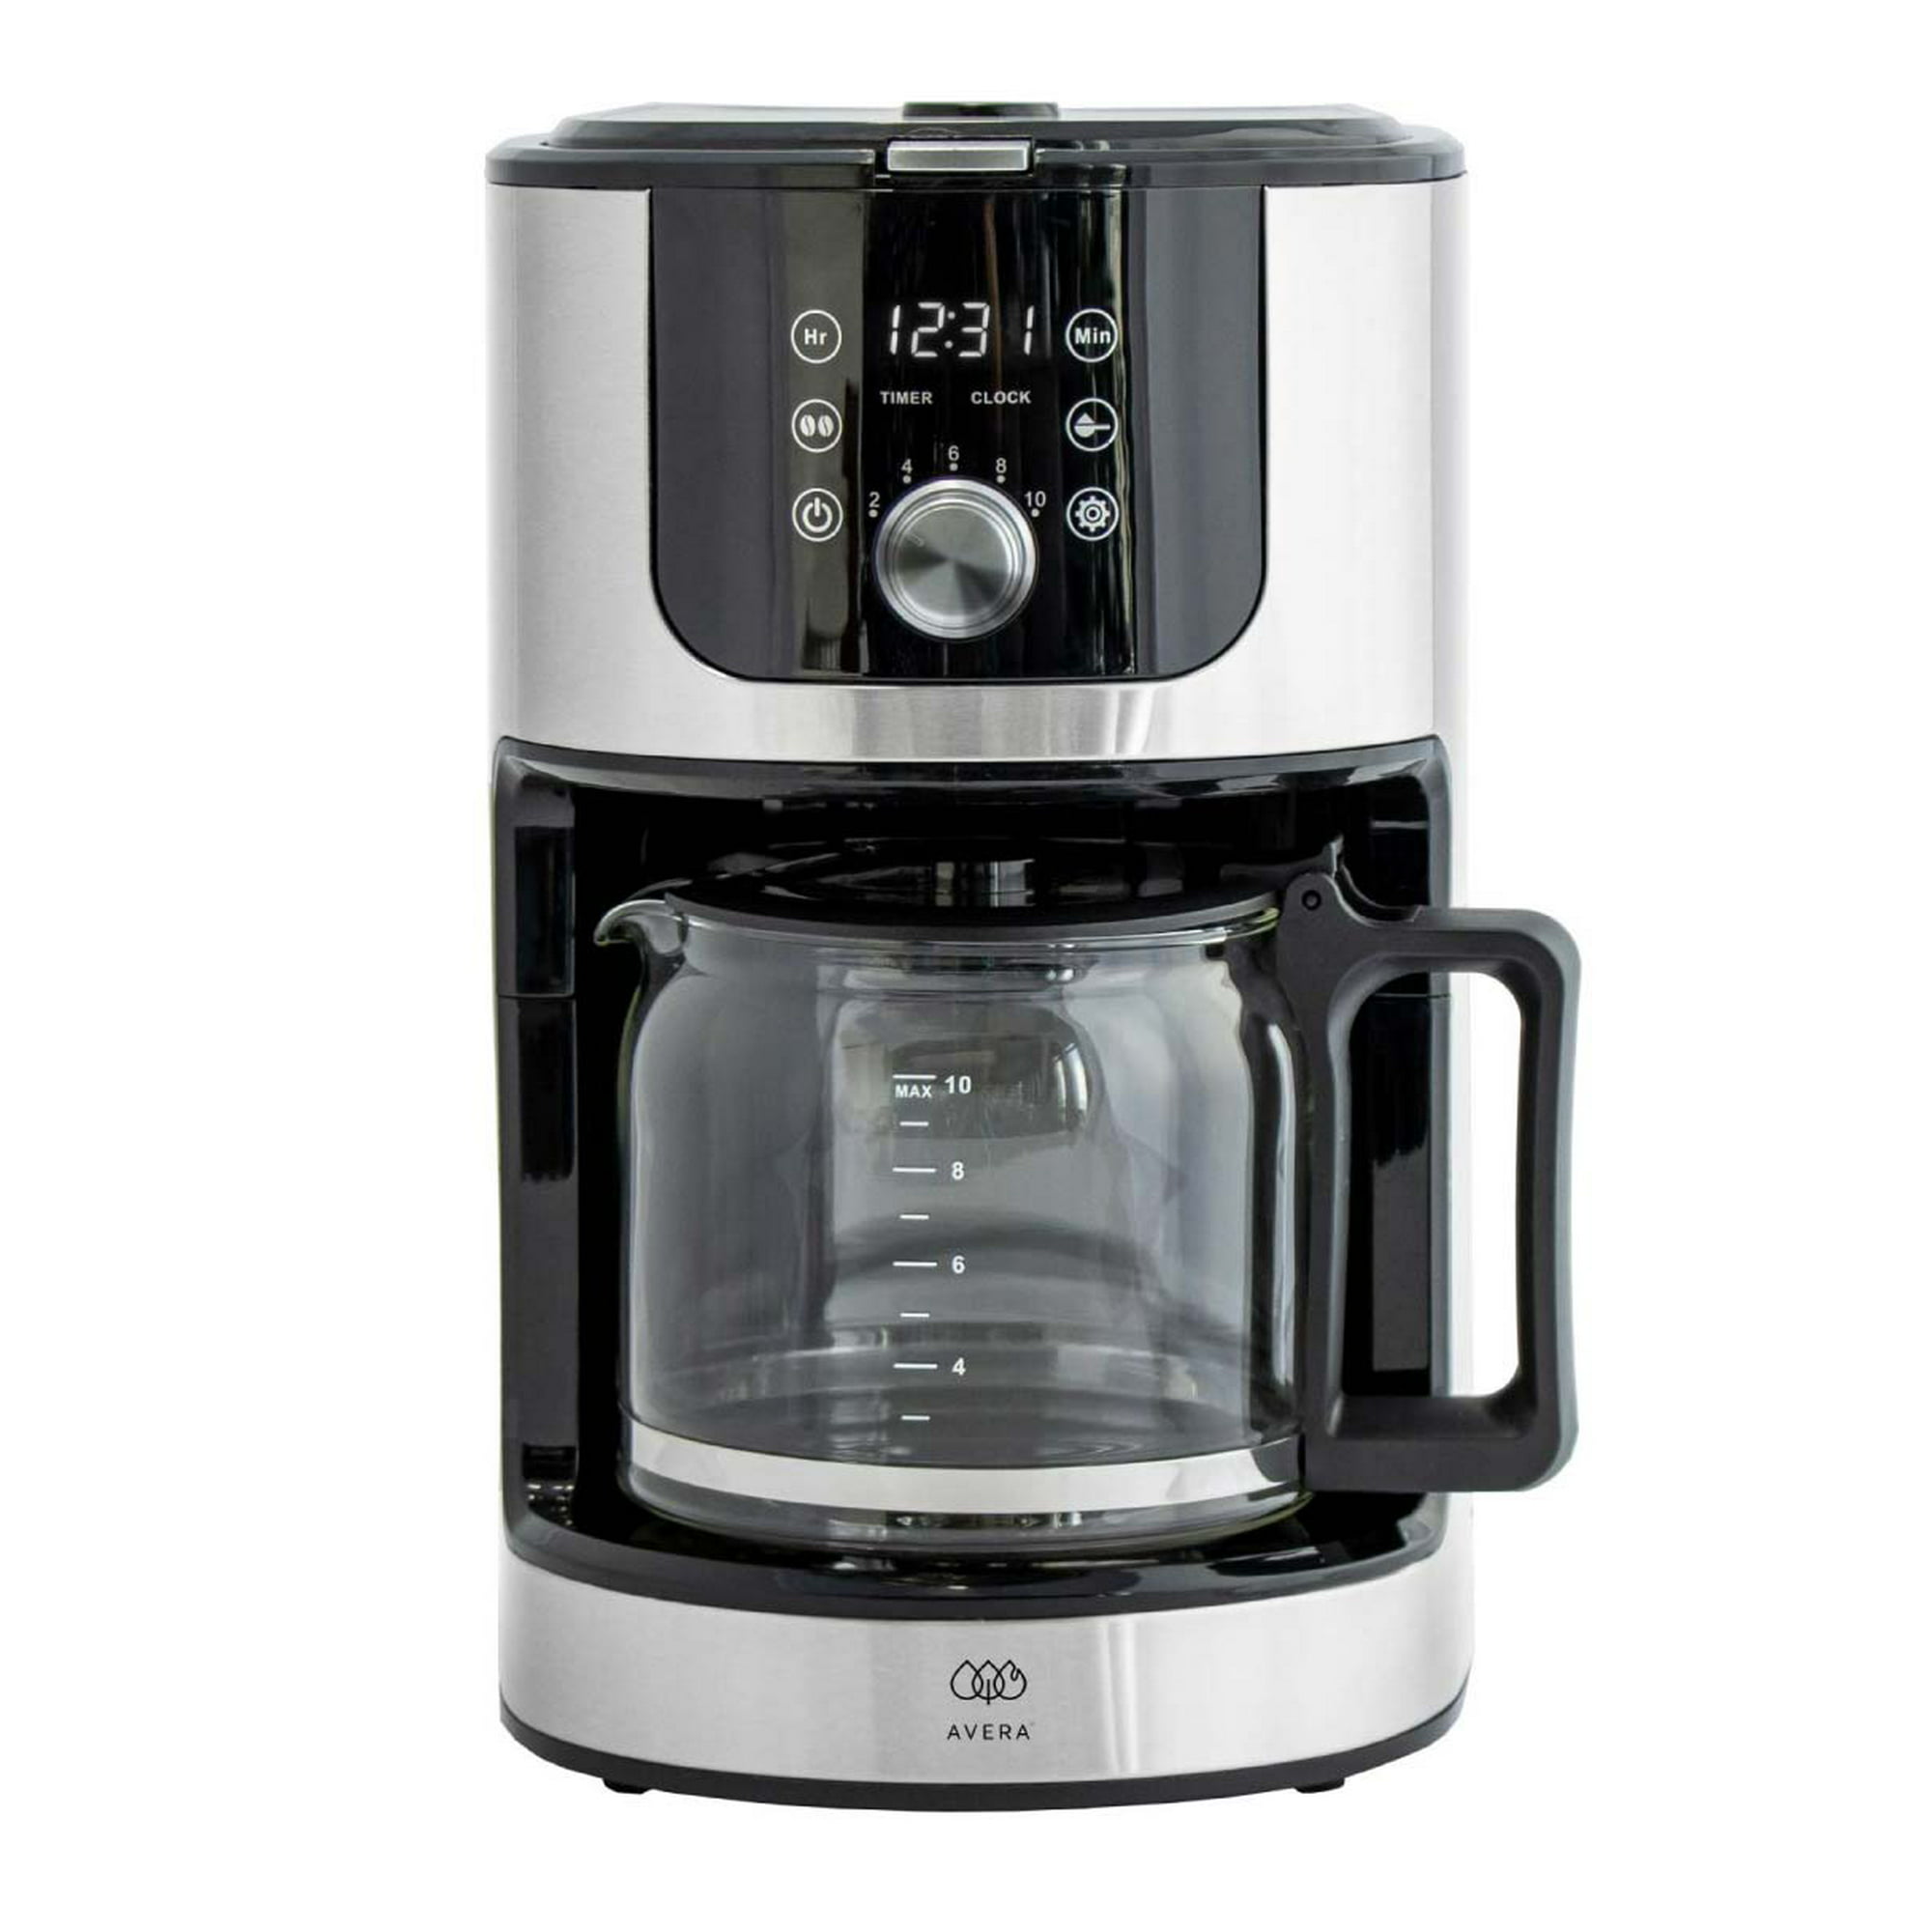  GAOF Máquina de café de grano a taza, cafetera automática,  cafetera de goteo, hogar, oficina, comercial, puede contener 5-10 tazas  (negro) : Hogar y Cocina